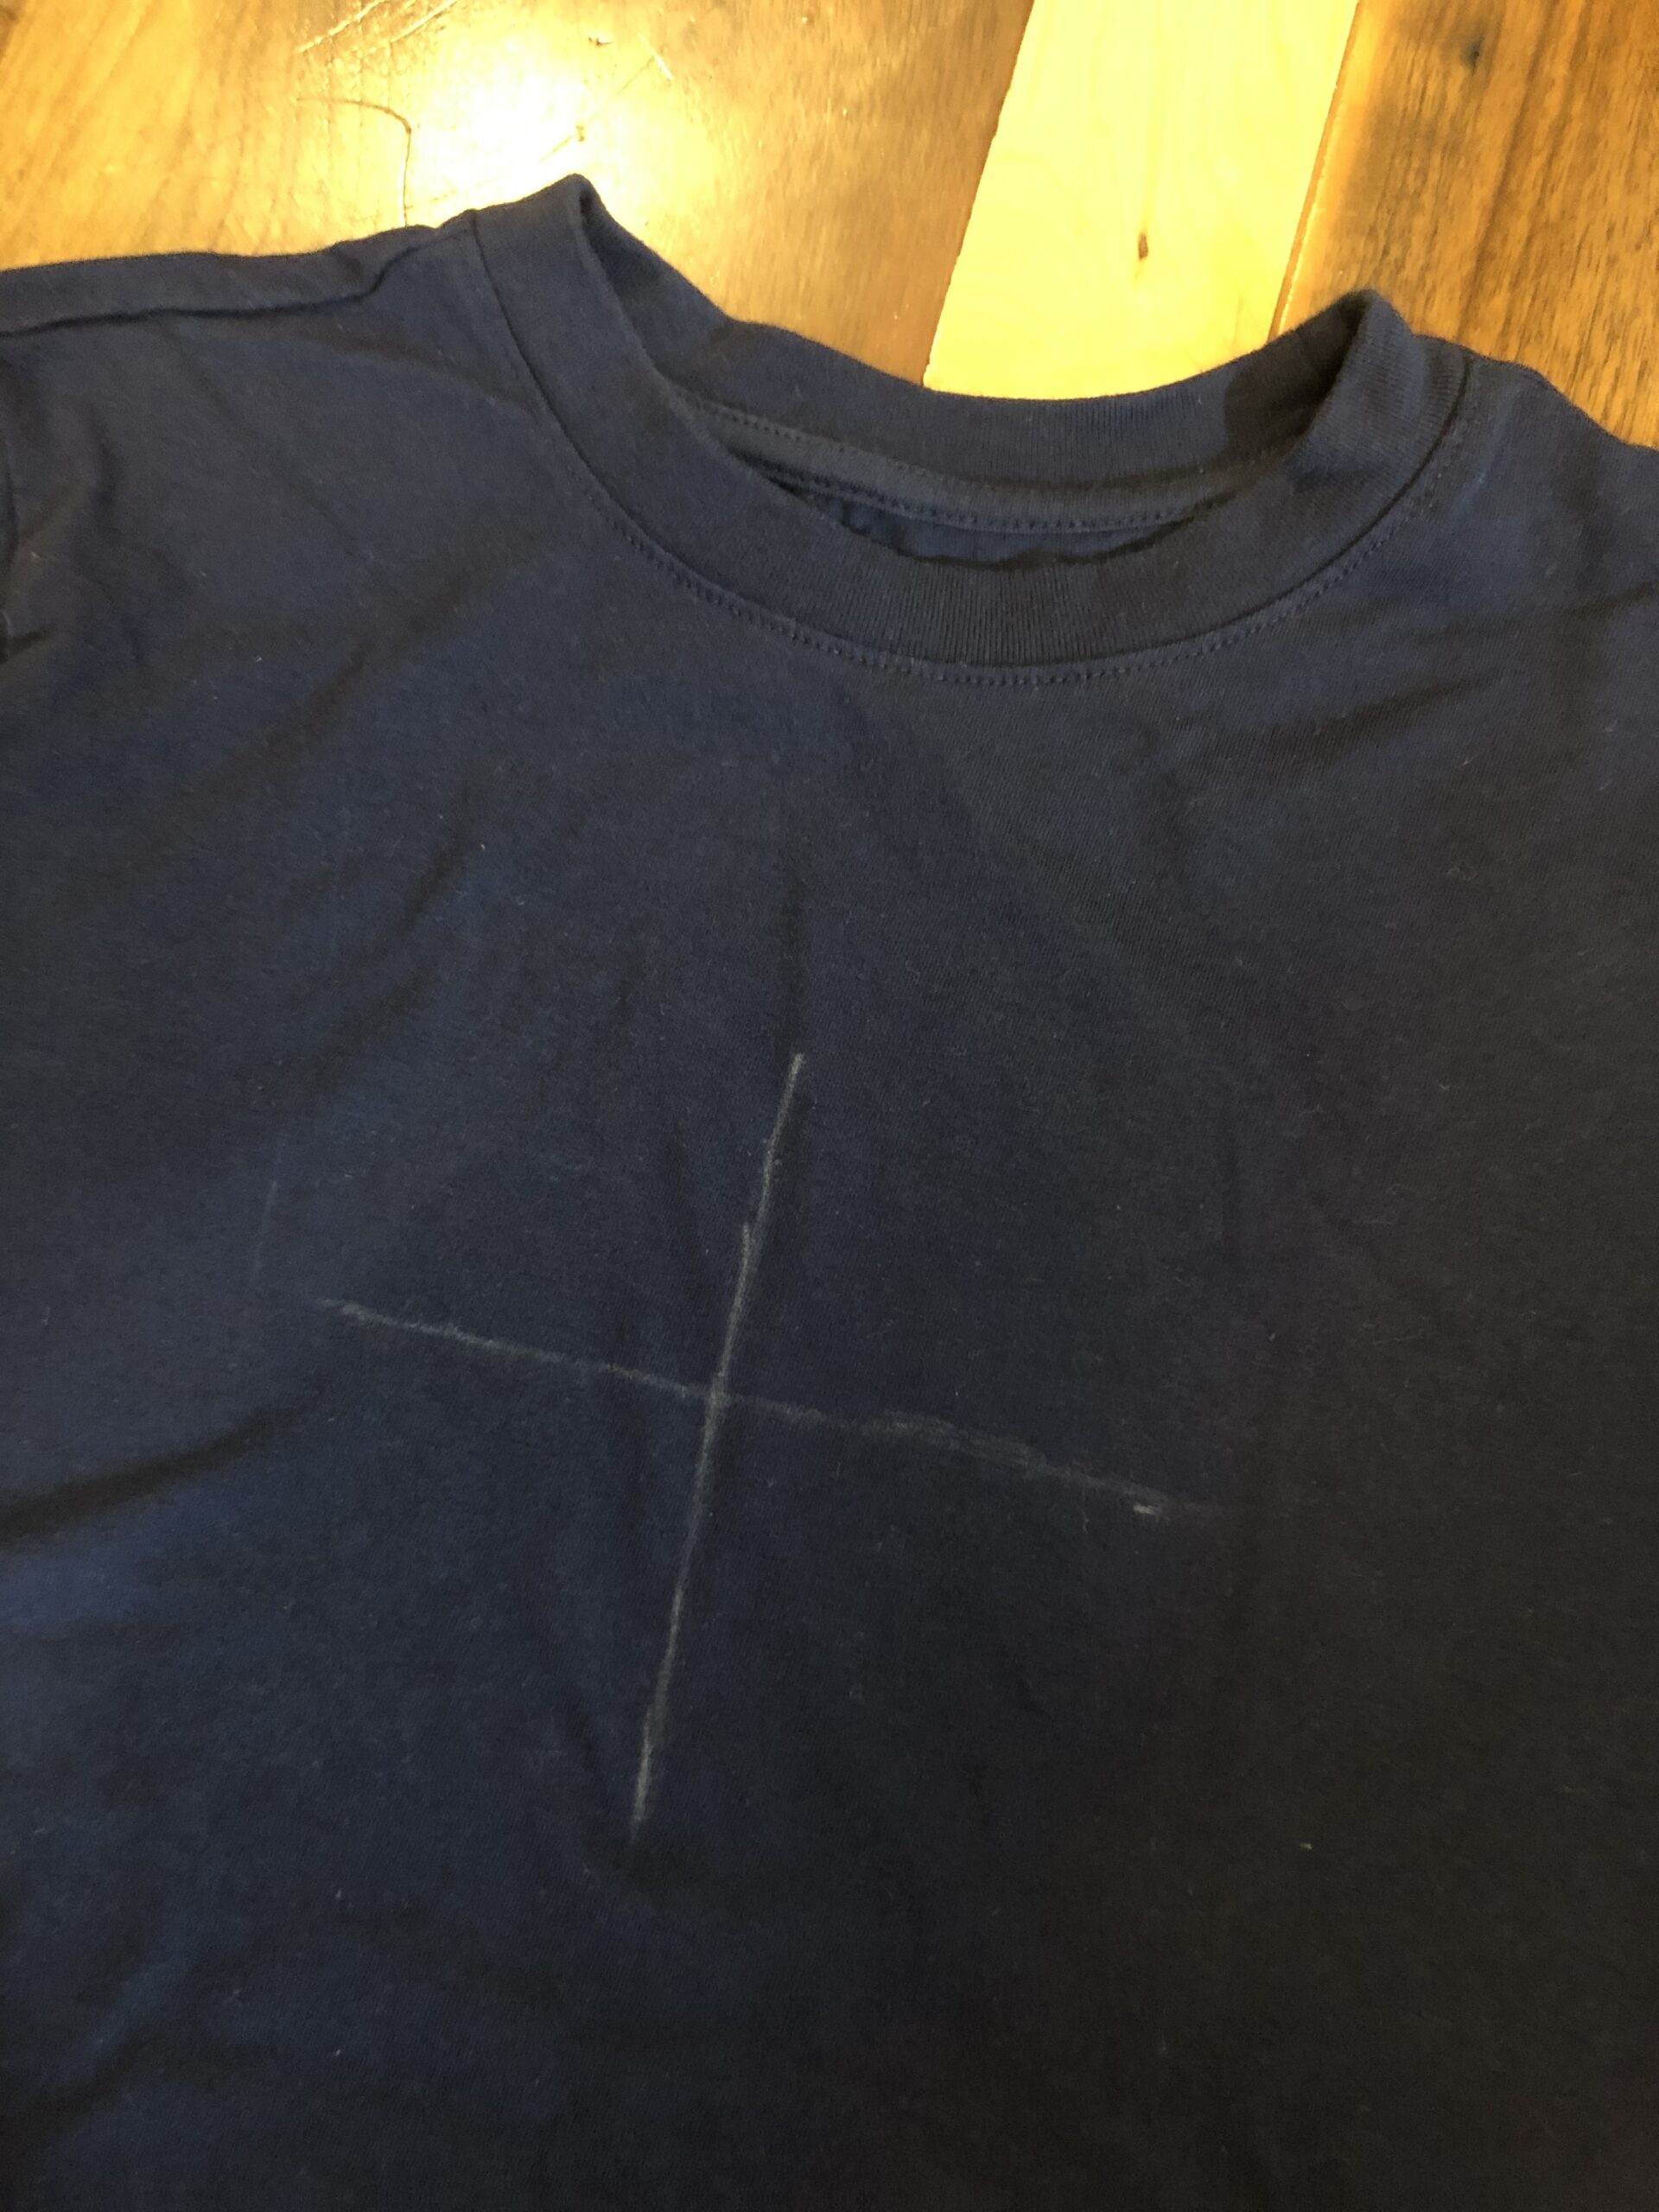 Star Wars t-shirt sewing